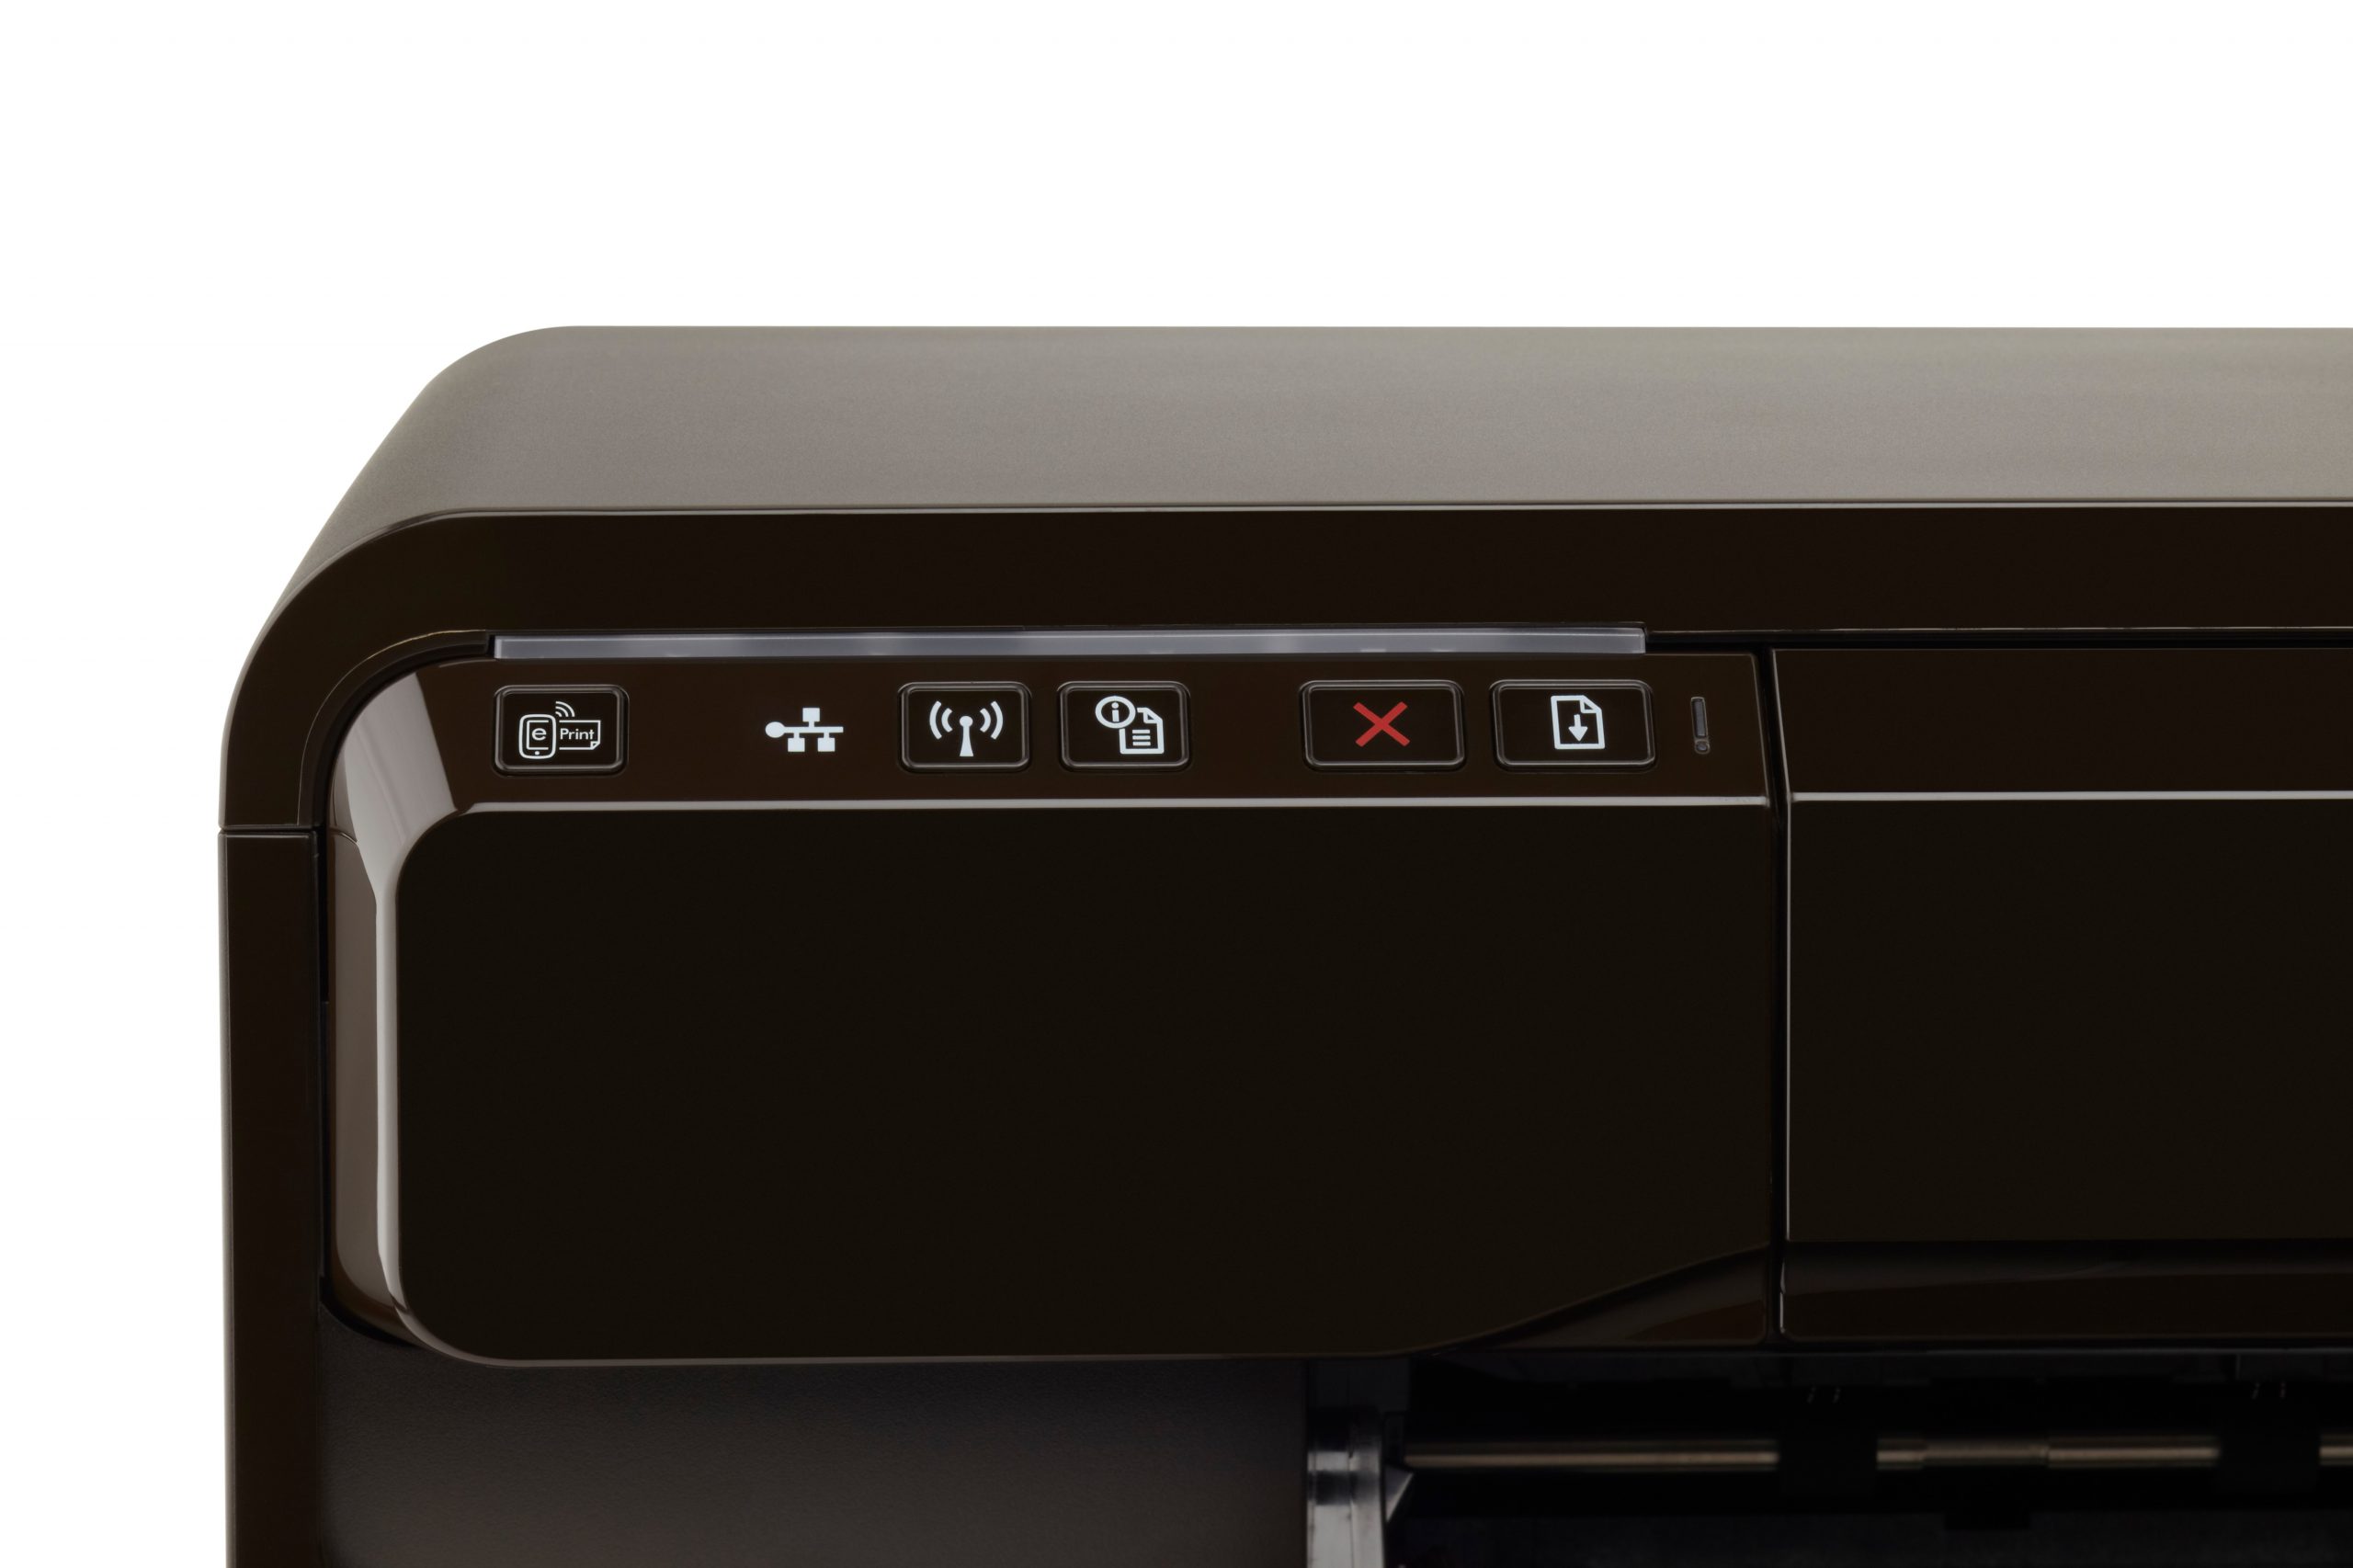 HP Officejet 7110 stampante a getto d'inchiostro a colori 4800 x 1200 DPI A3 Wi-Fi 32ppm Rete